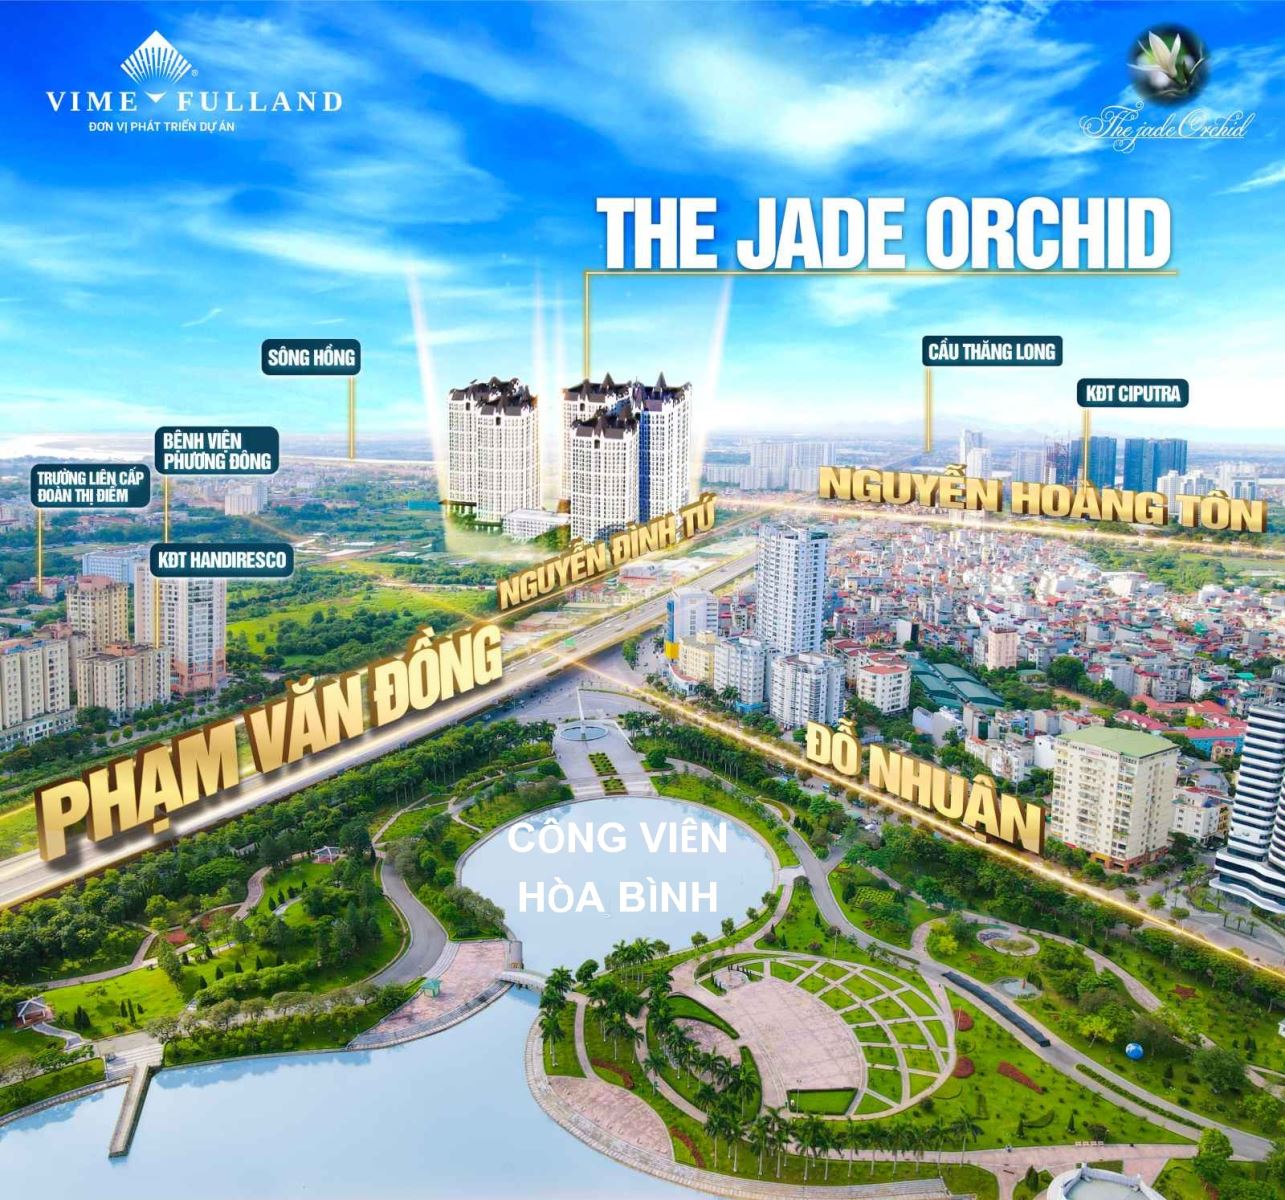 The-Jade-Orchid-Vimefulland-pham-van-dong